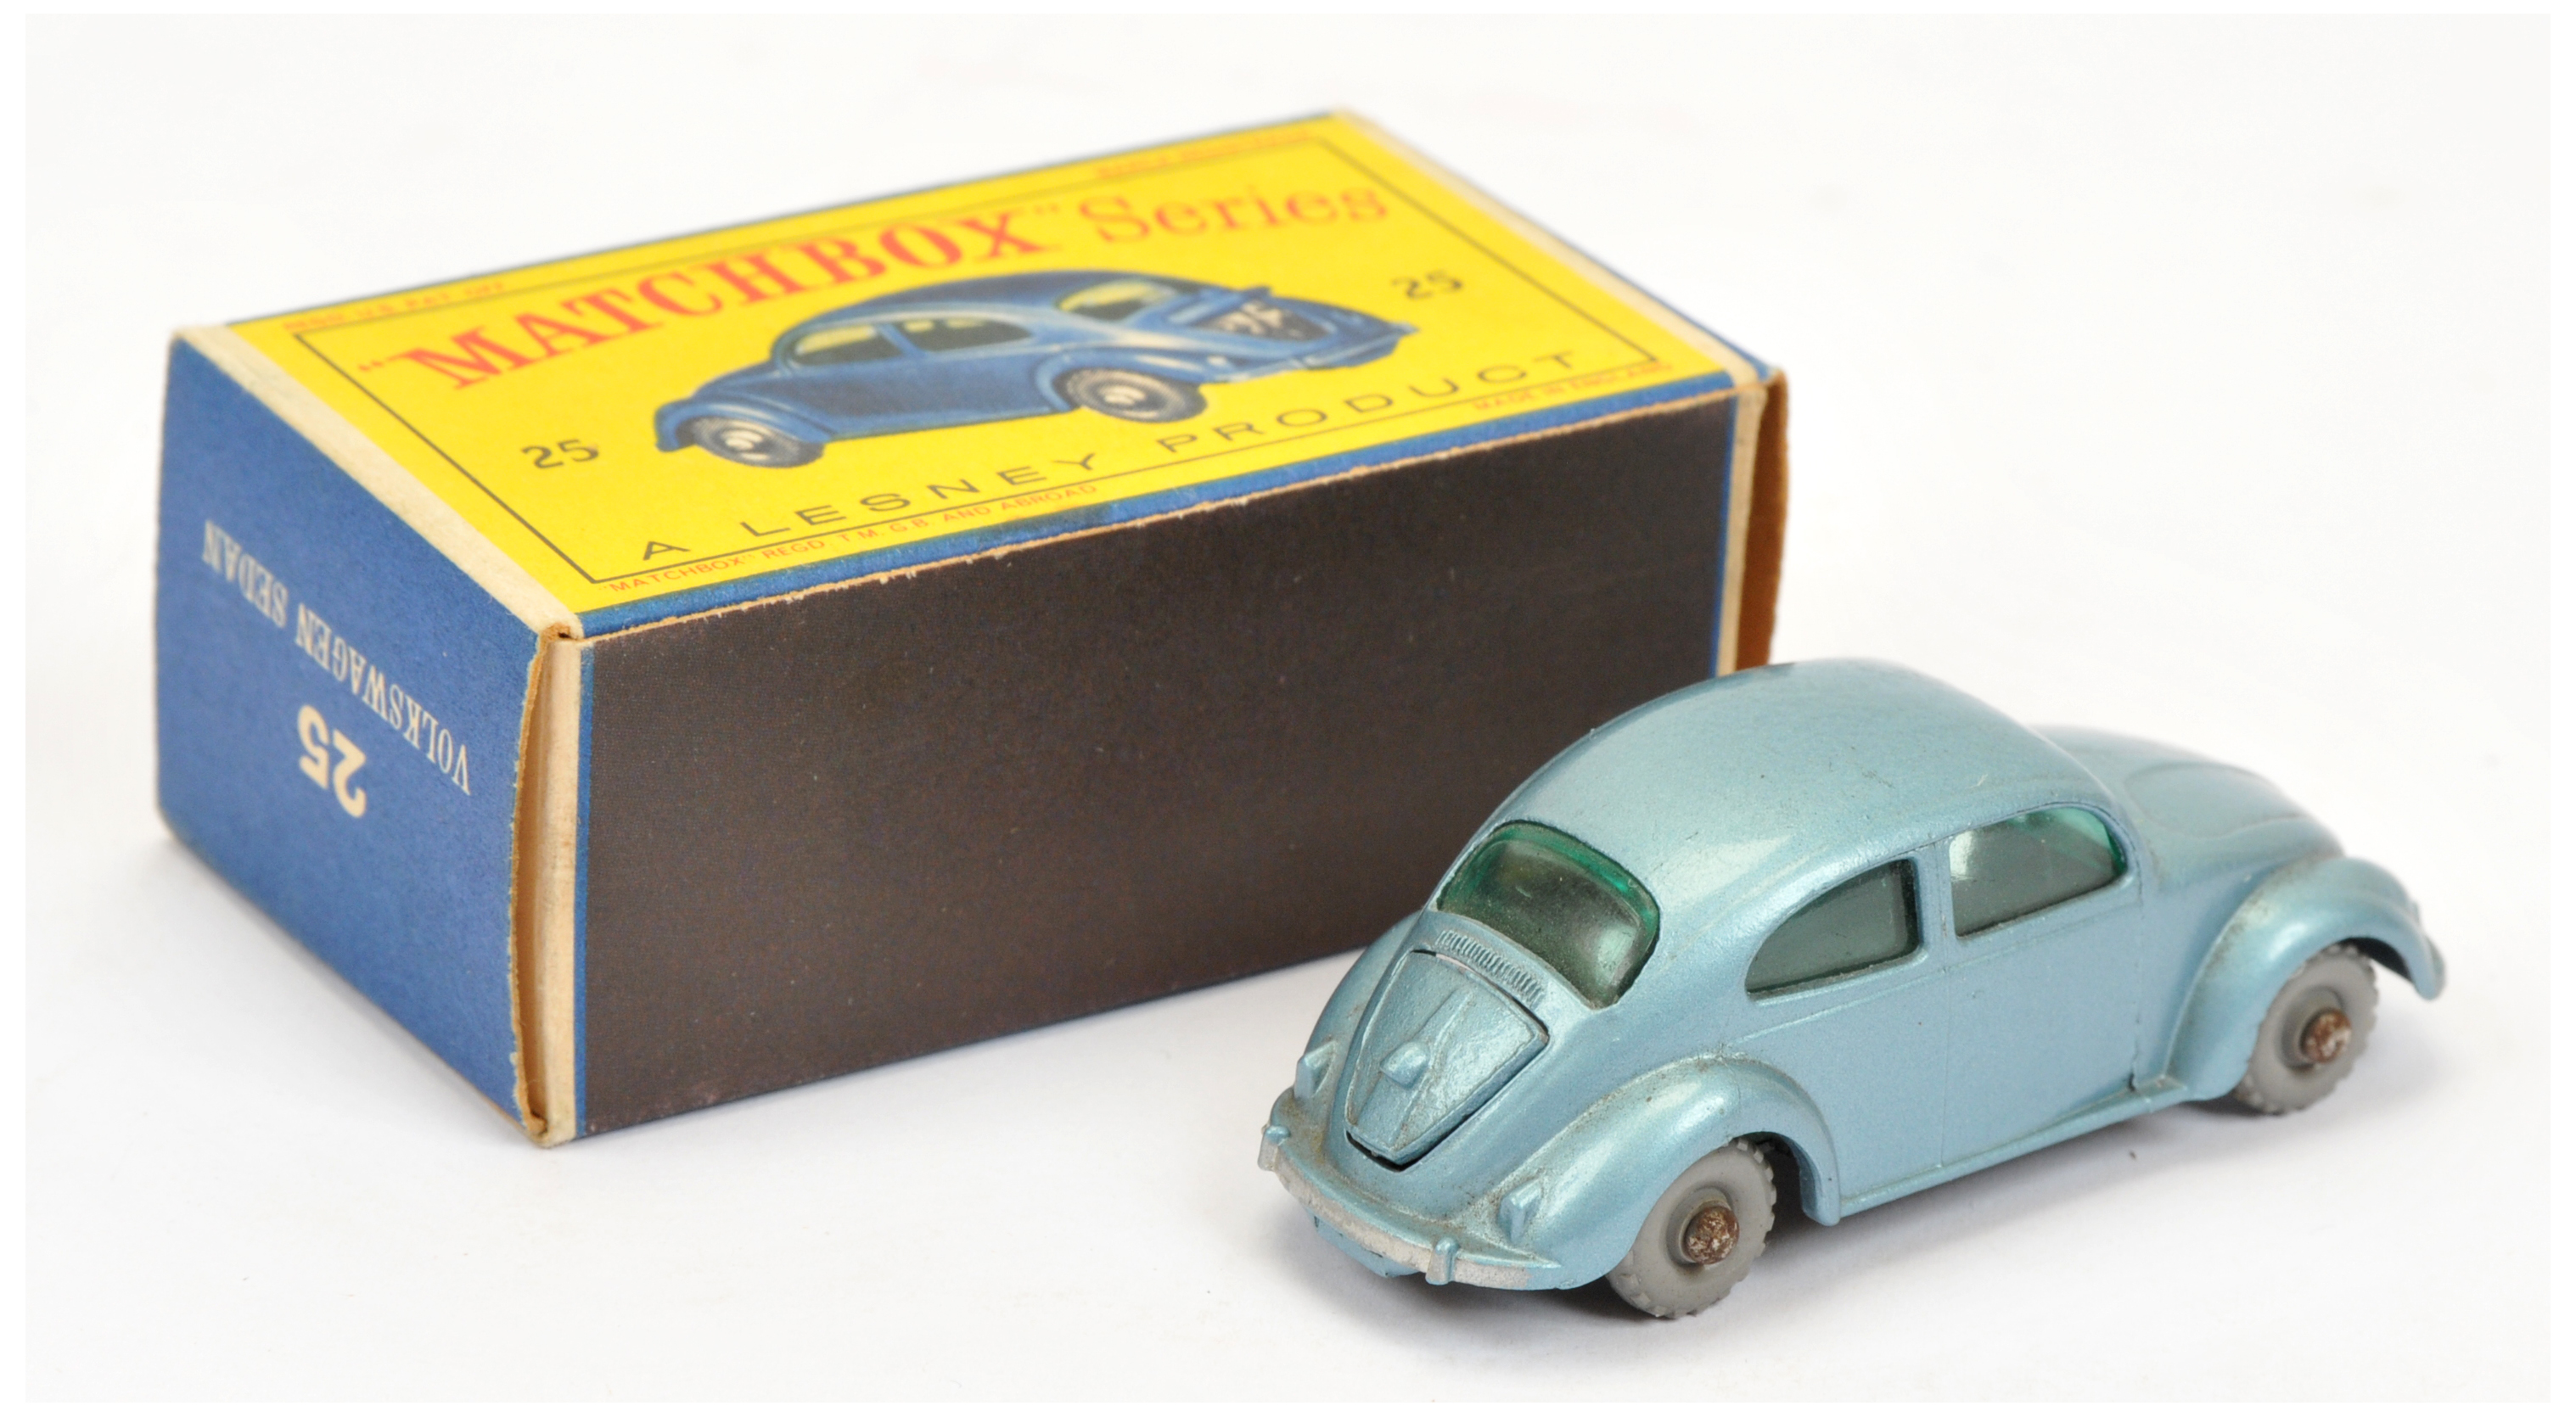 Matchbox Regular Wheels 25b Volkswagen Beetle - Stannard Code 4 - metallic silver-blue body with ... - Image 2 of 2